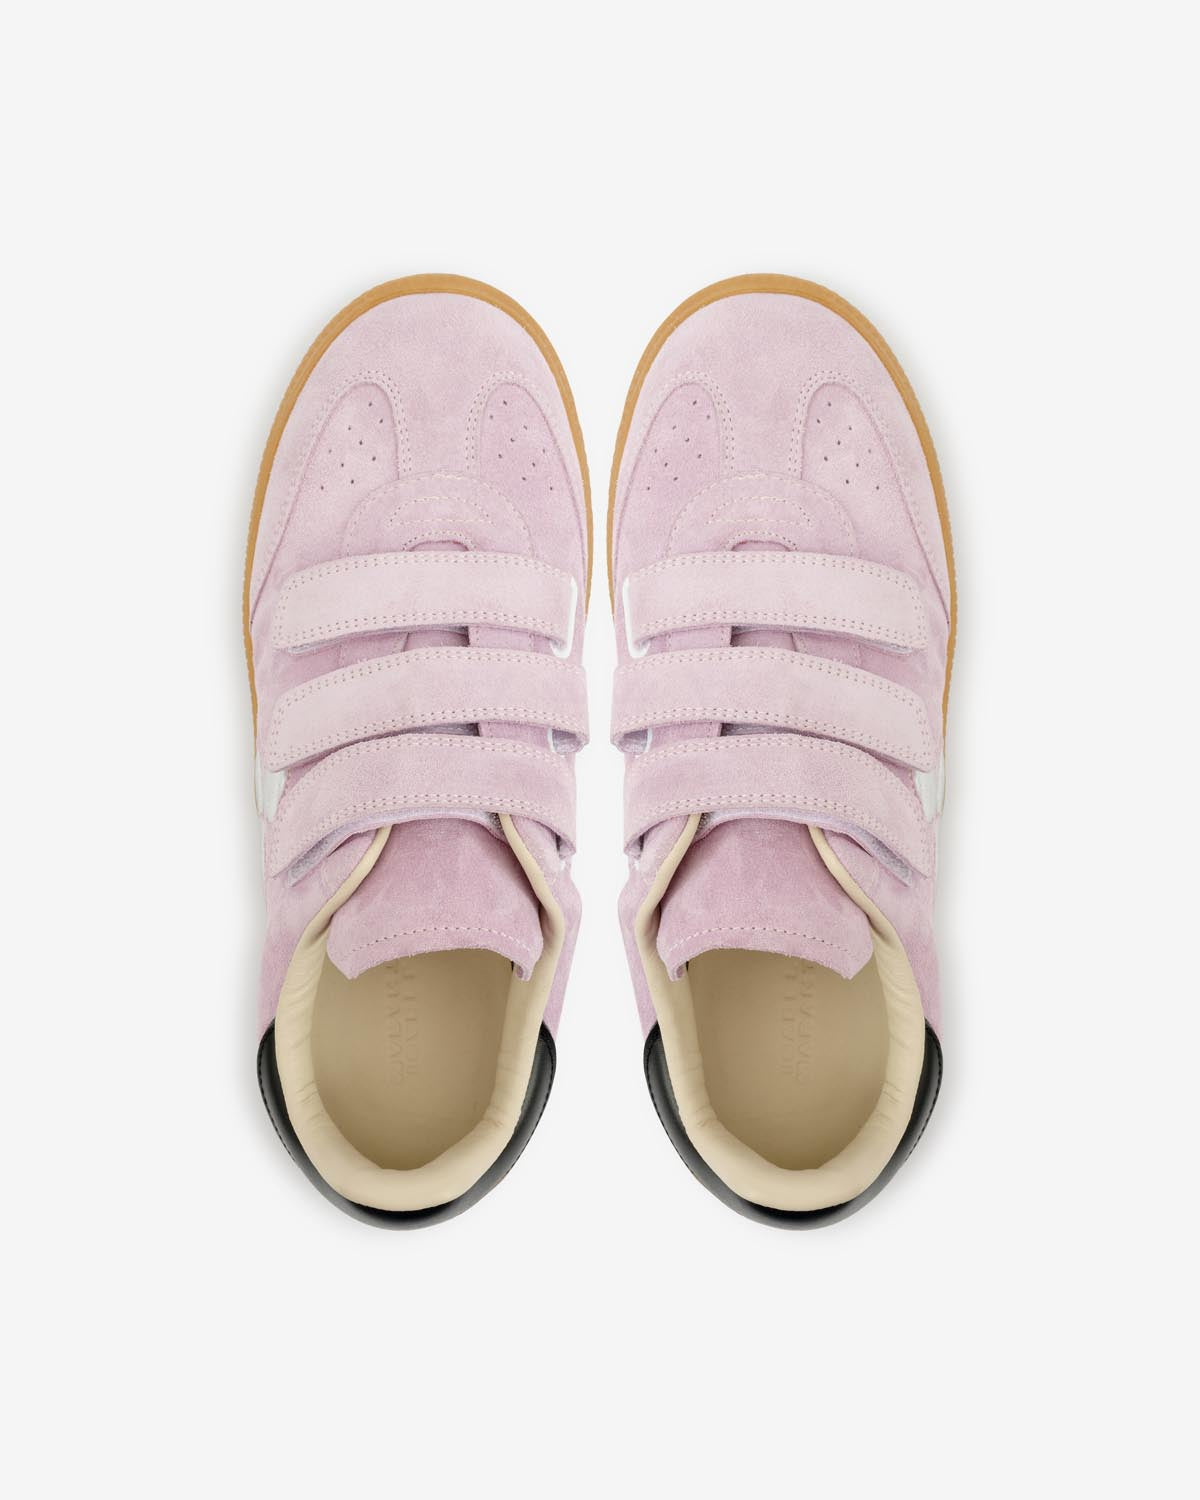 Beth sneakers Woman Pink-silver 2